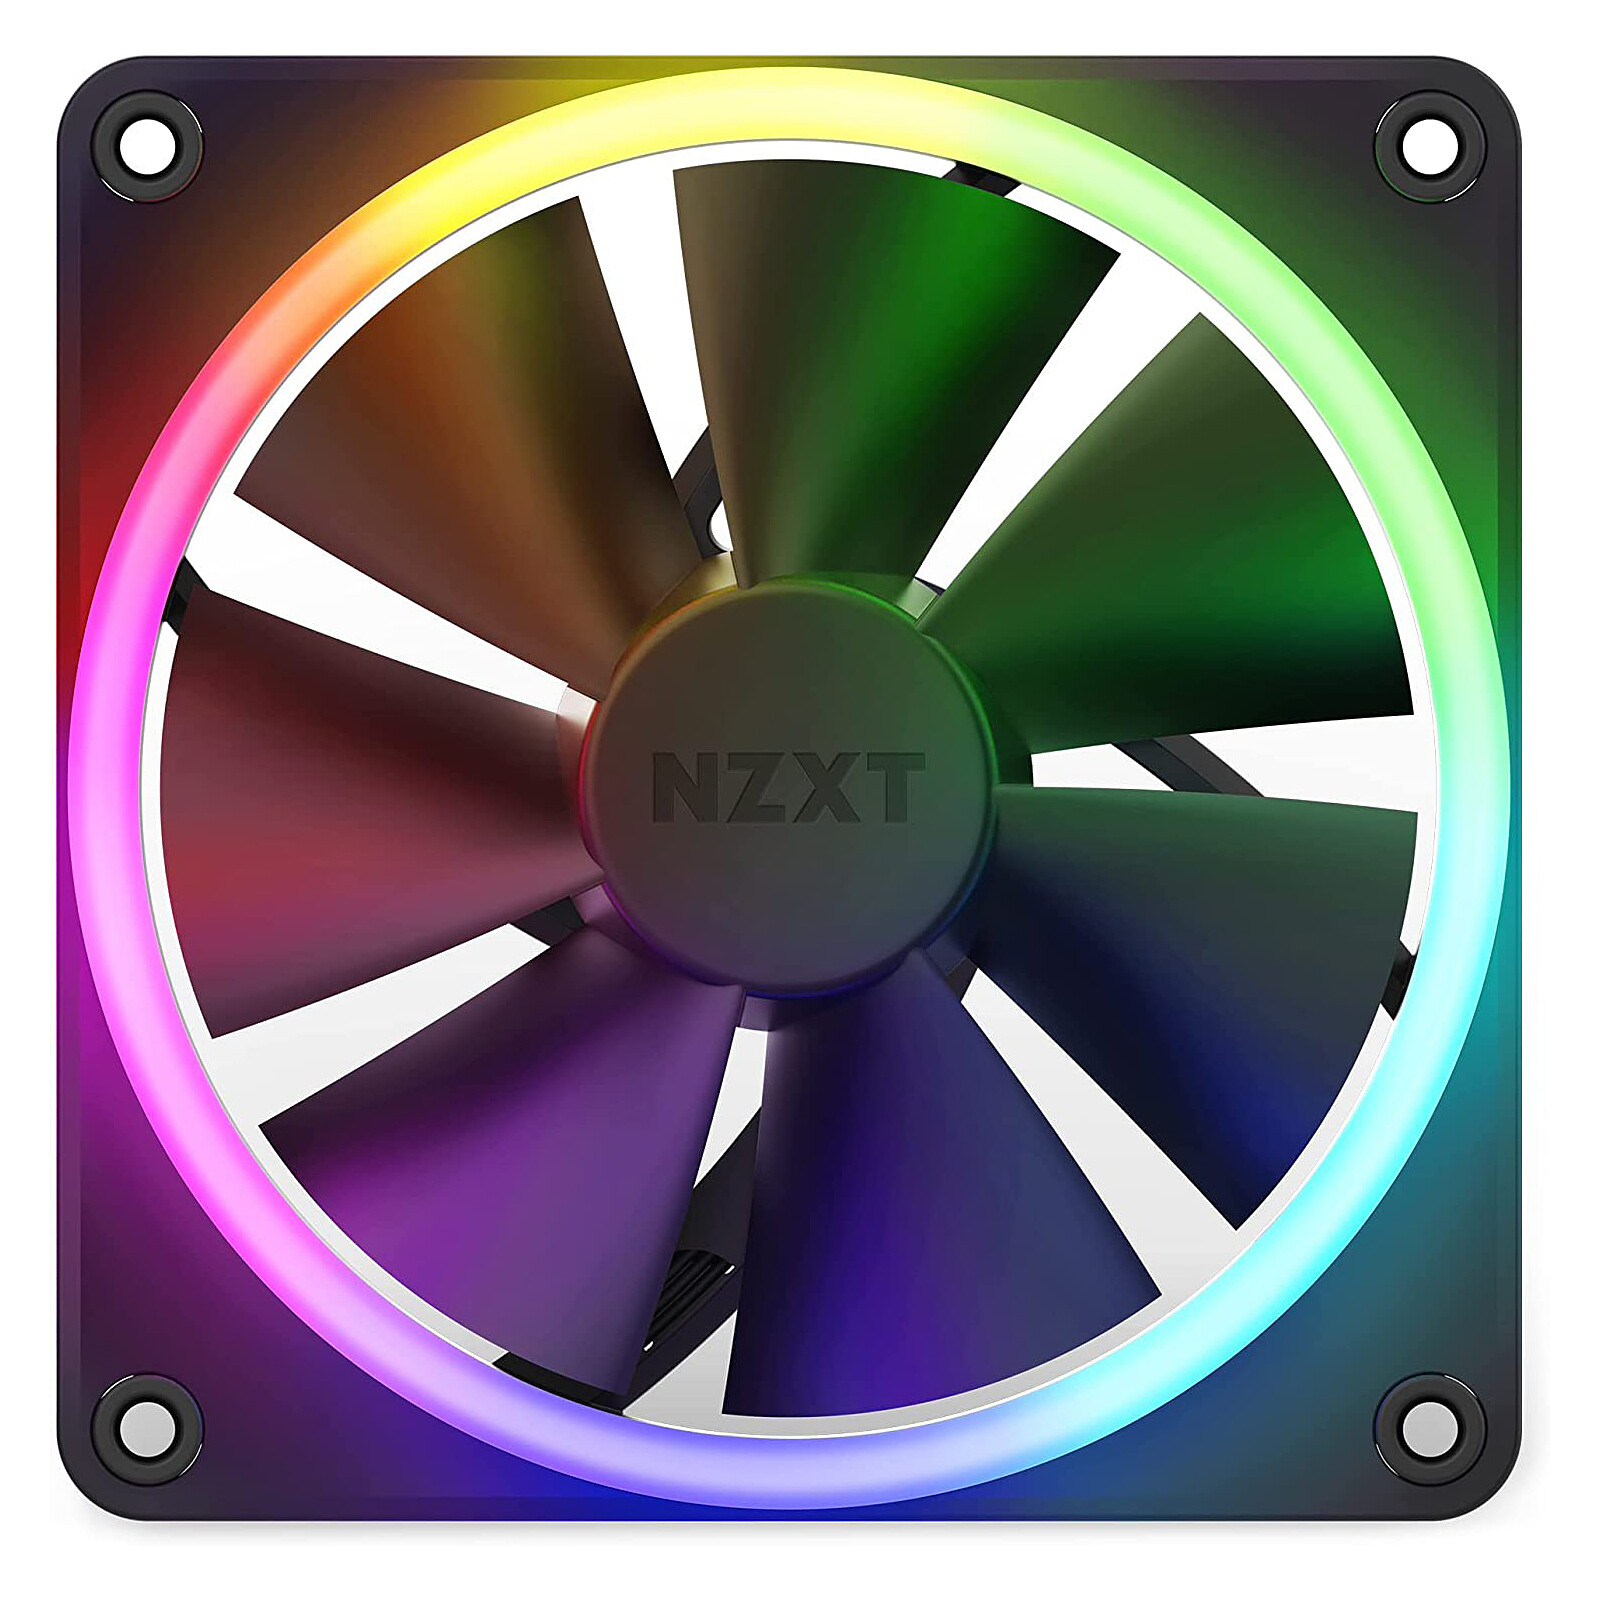 NZXT F120 RGB (Noir) - Ventilateur boîtier - Garantie 3 ans LDLC